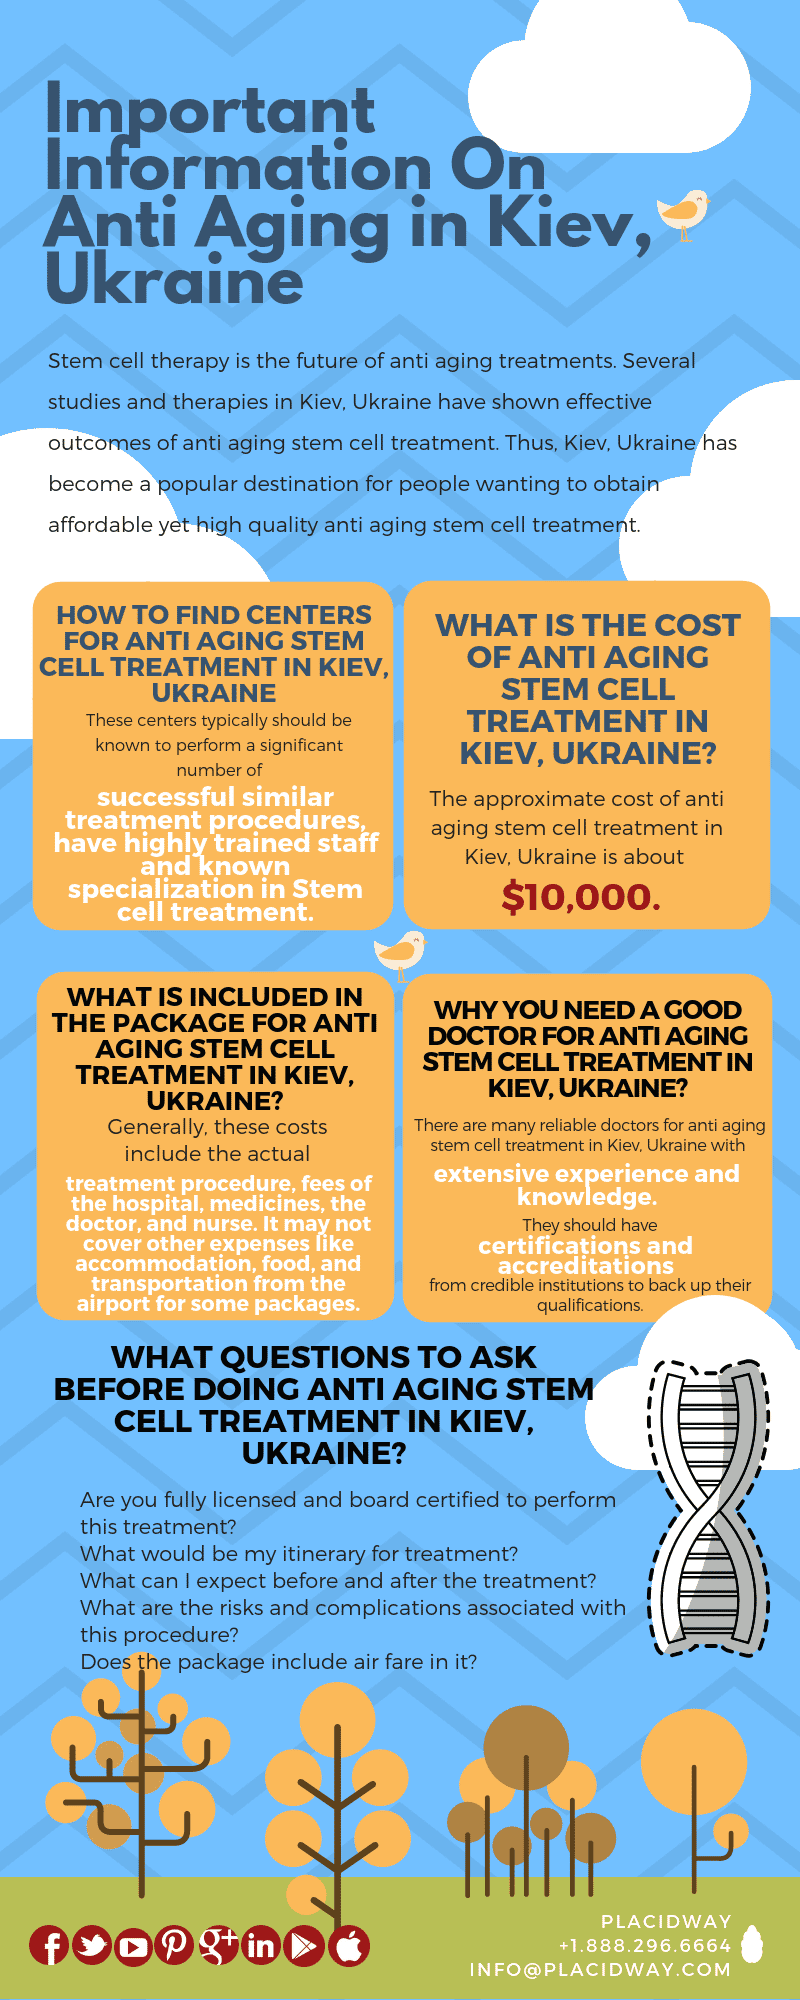 Important Information On Anti Aging in Kiev, Ukraine